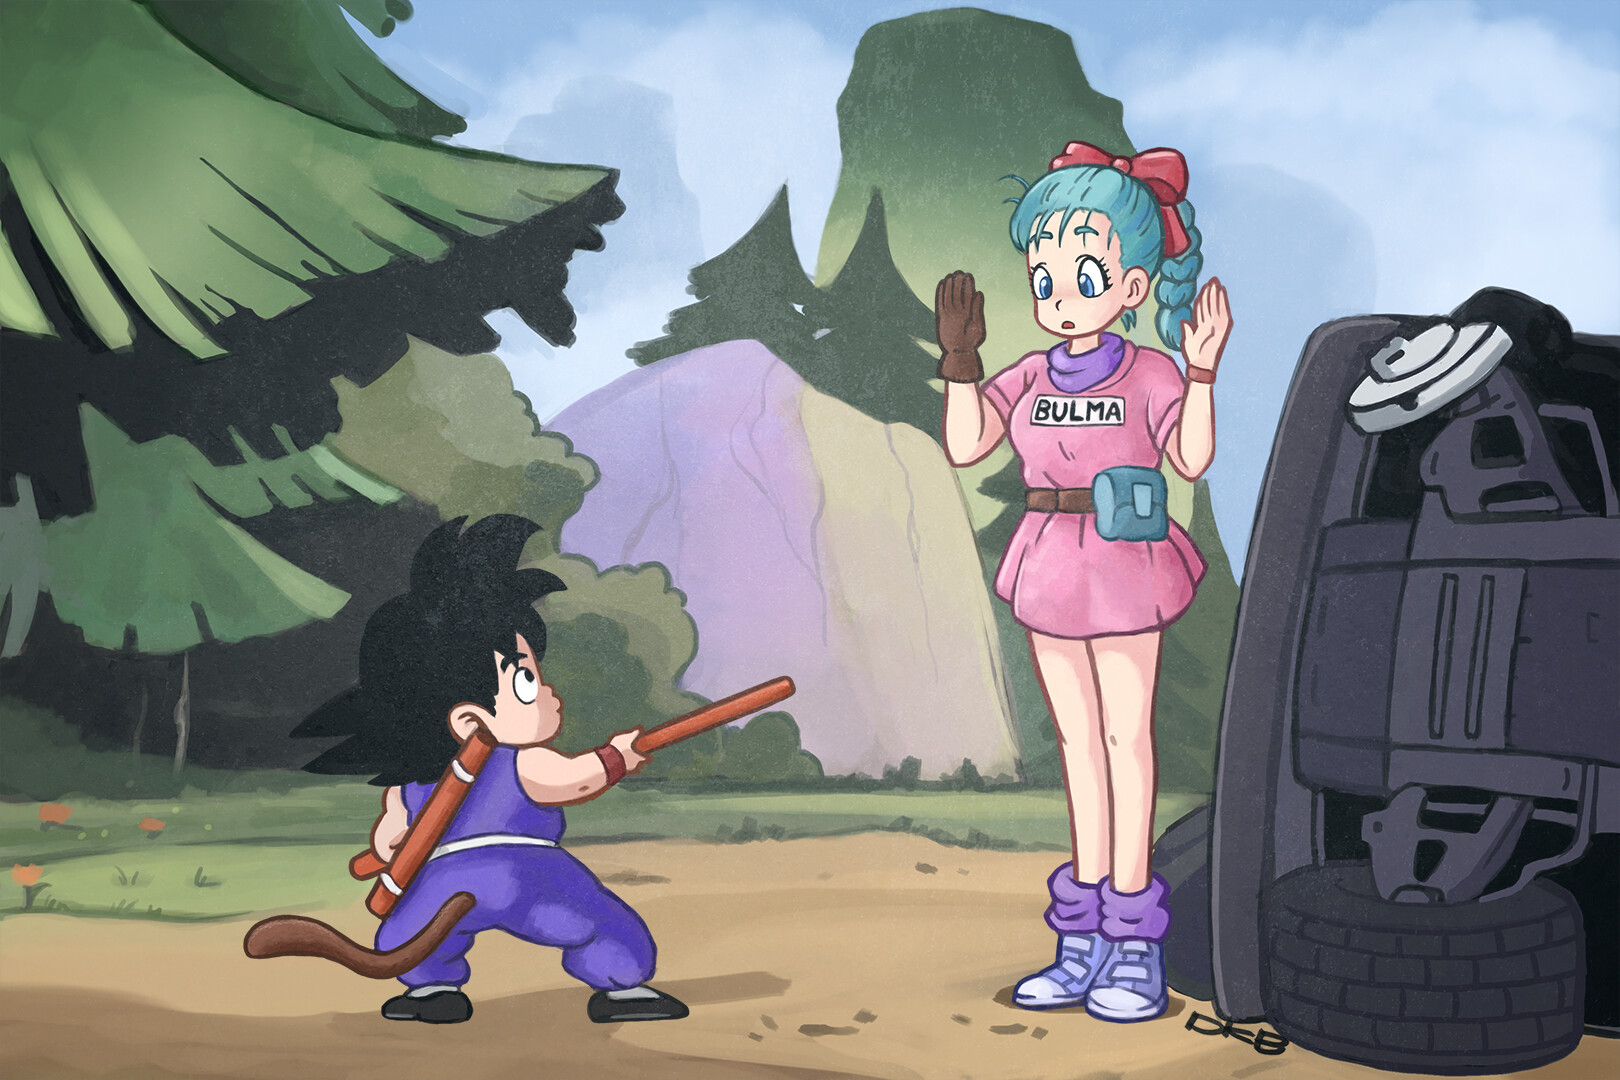 ArtStation - Goku meets Bulma